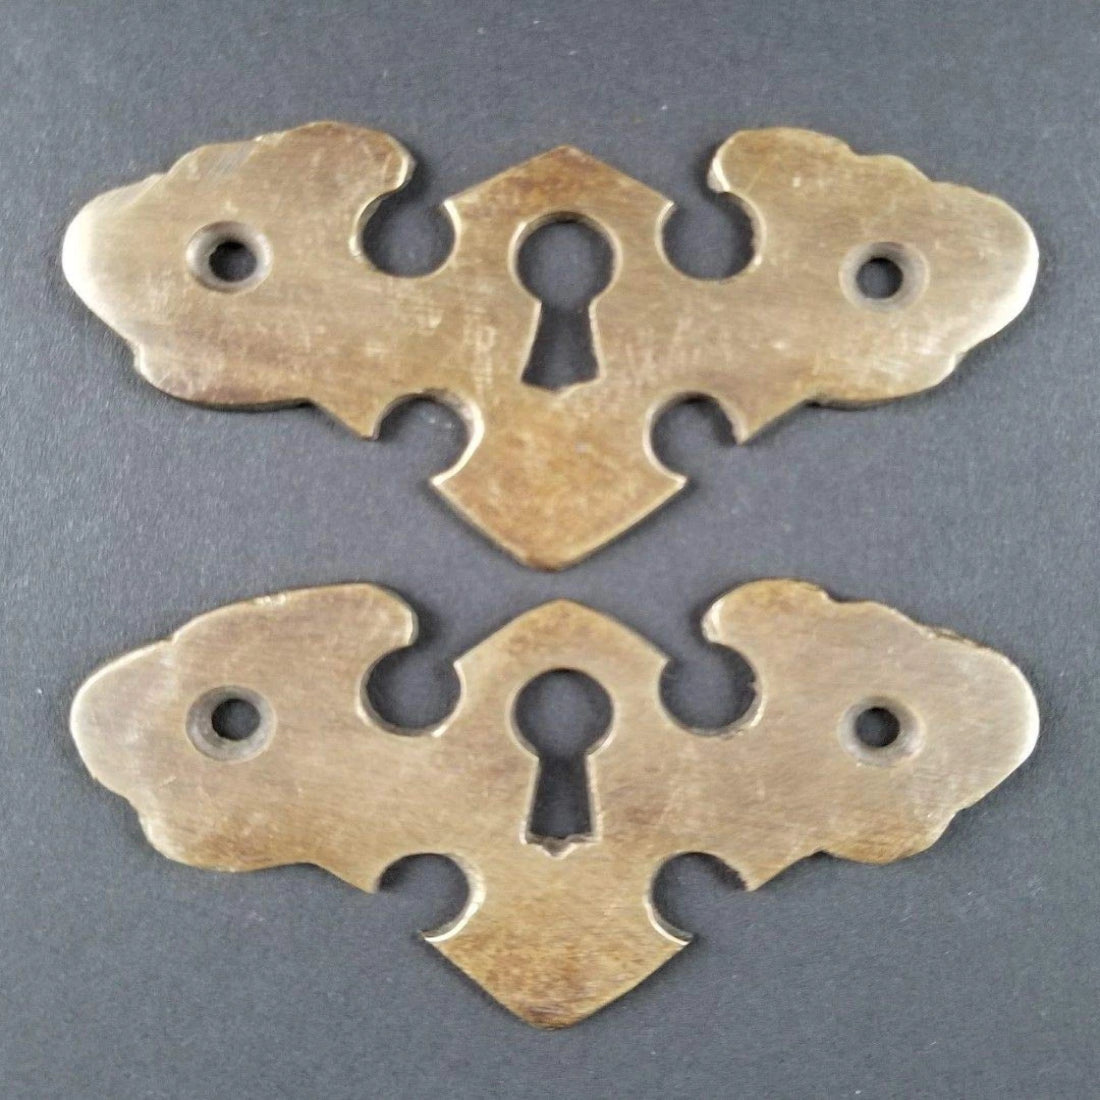 2 Vintage Antique Ornate Brass Escutcheons Keyhole Covers 2 1/2" Wide #E17